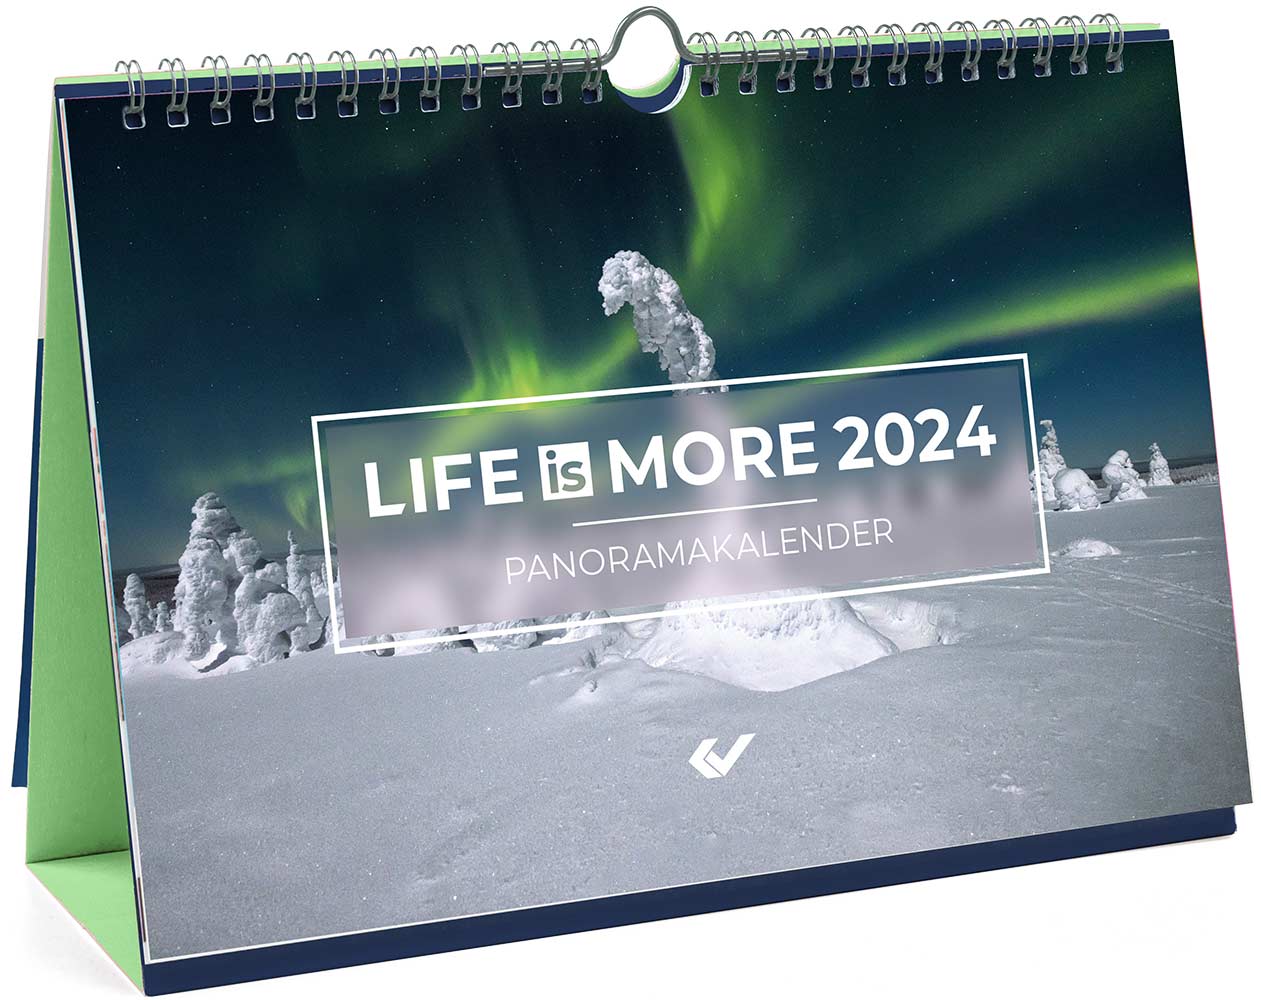 Life-is-More 2024 - Panoramakalender